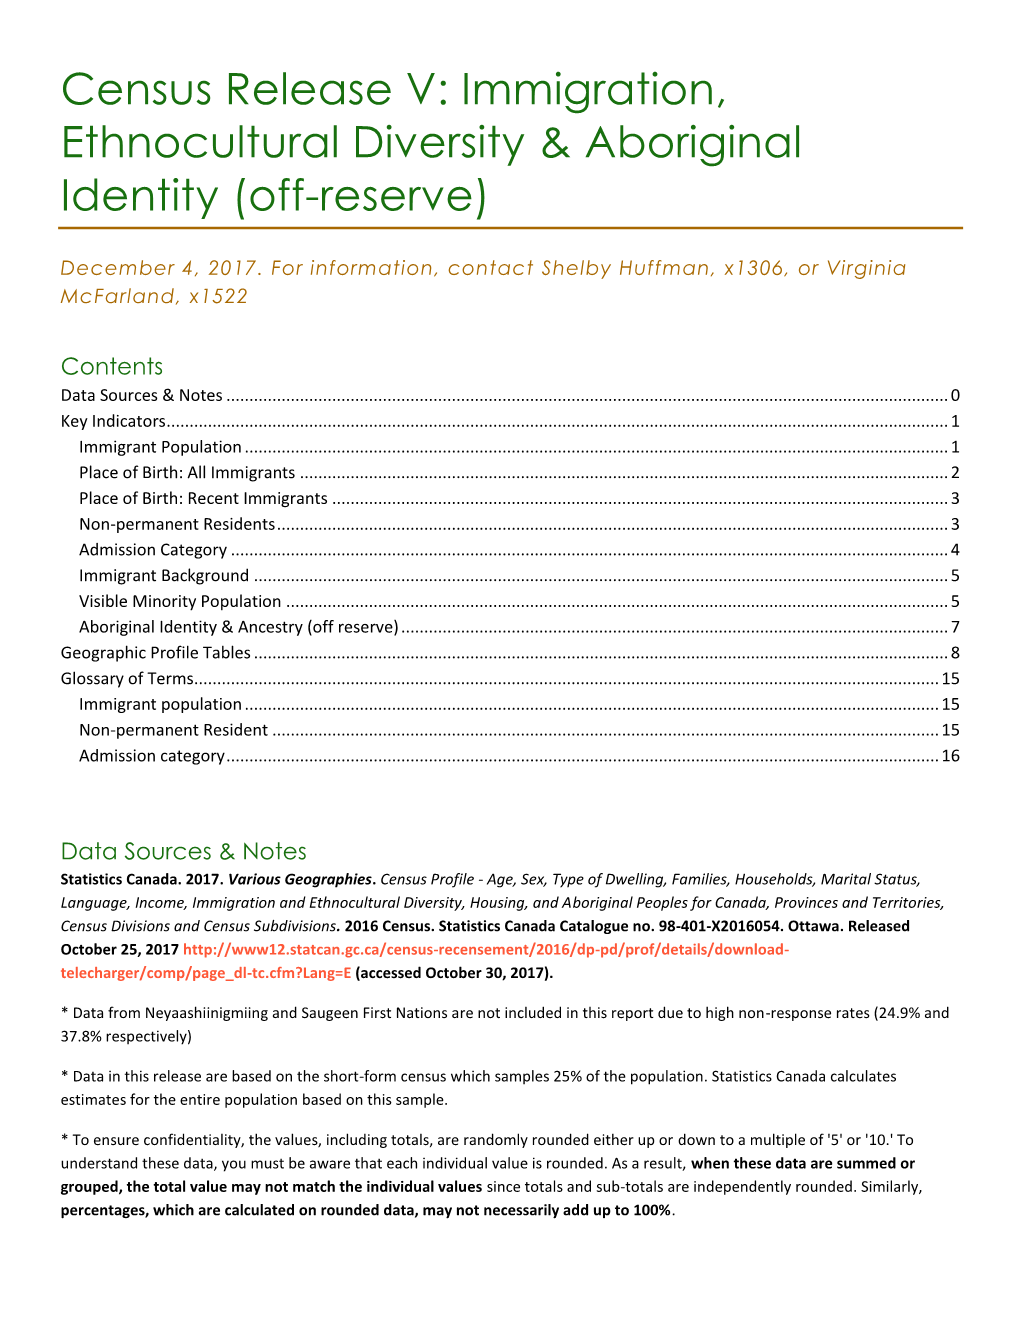 Census Release V Immigration, Ethnocultural Diversity, and Aboriginal Identity